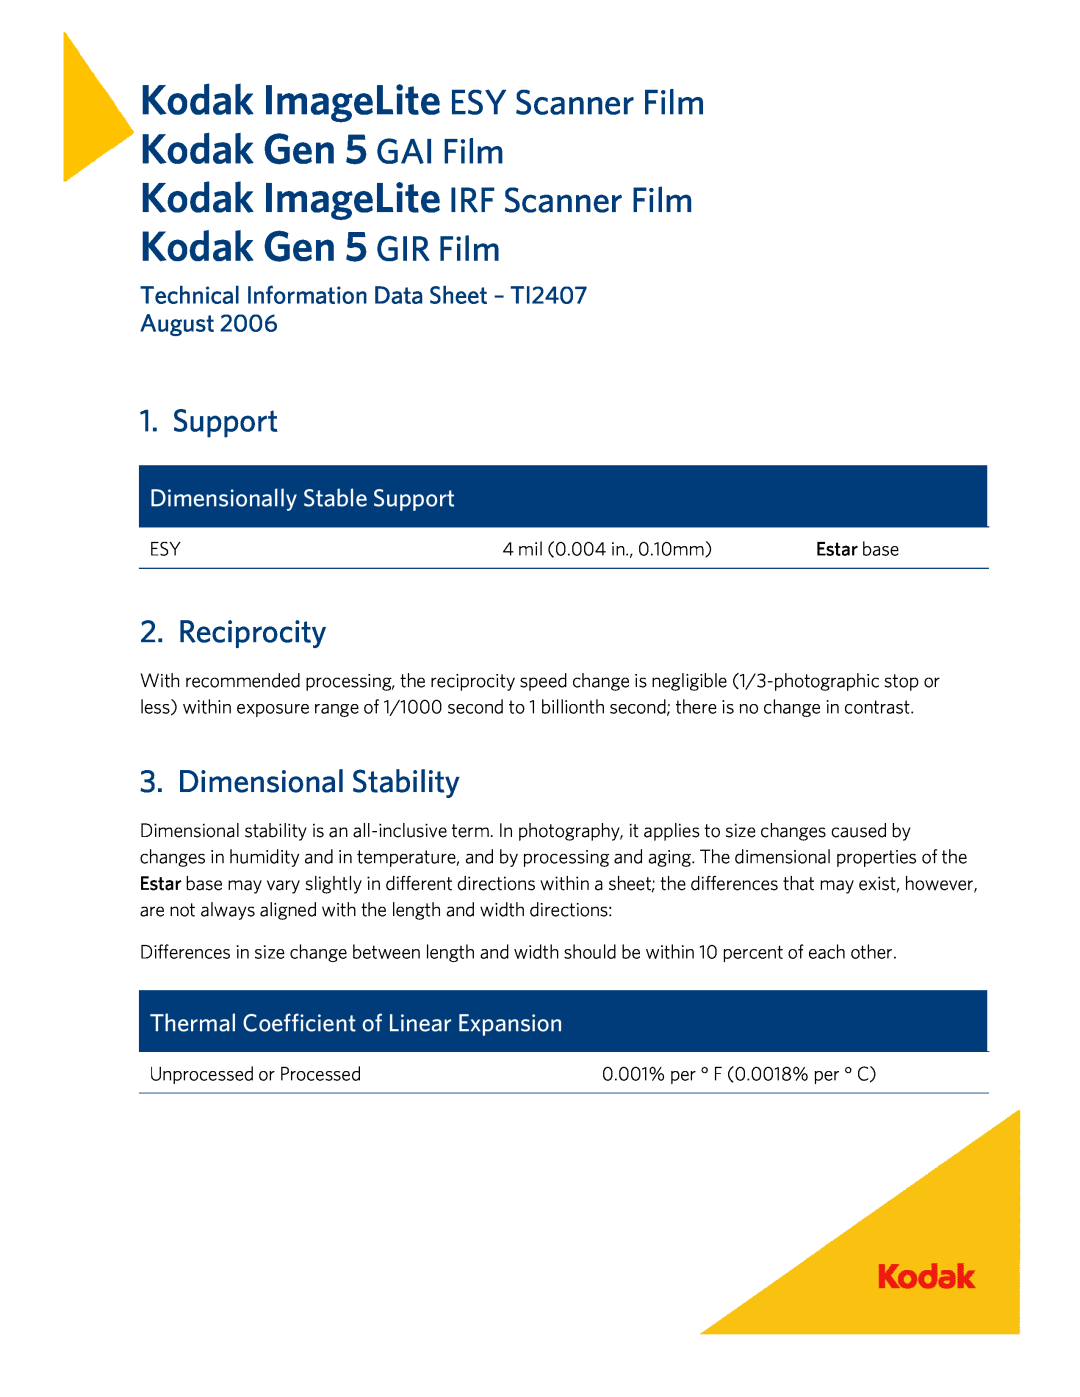 Kodak IRF, ESY, GAI, GIR Support, Reciprocity, Dimensional Stability, Technical Information Data Sheet - TI2407 August 